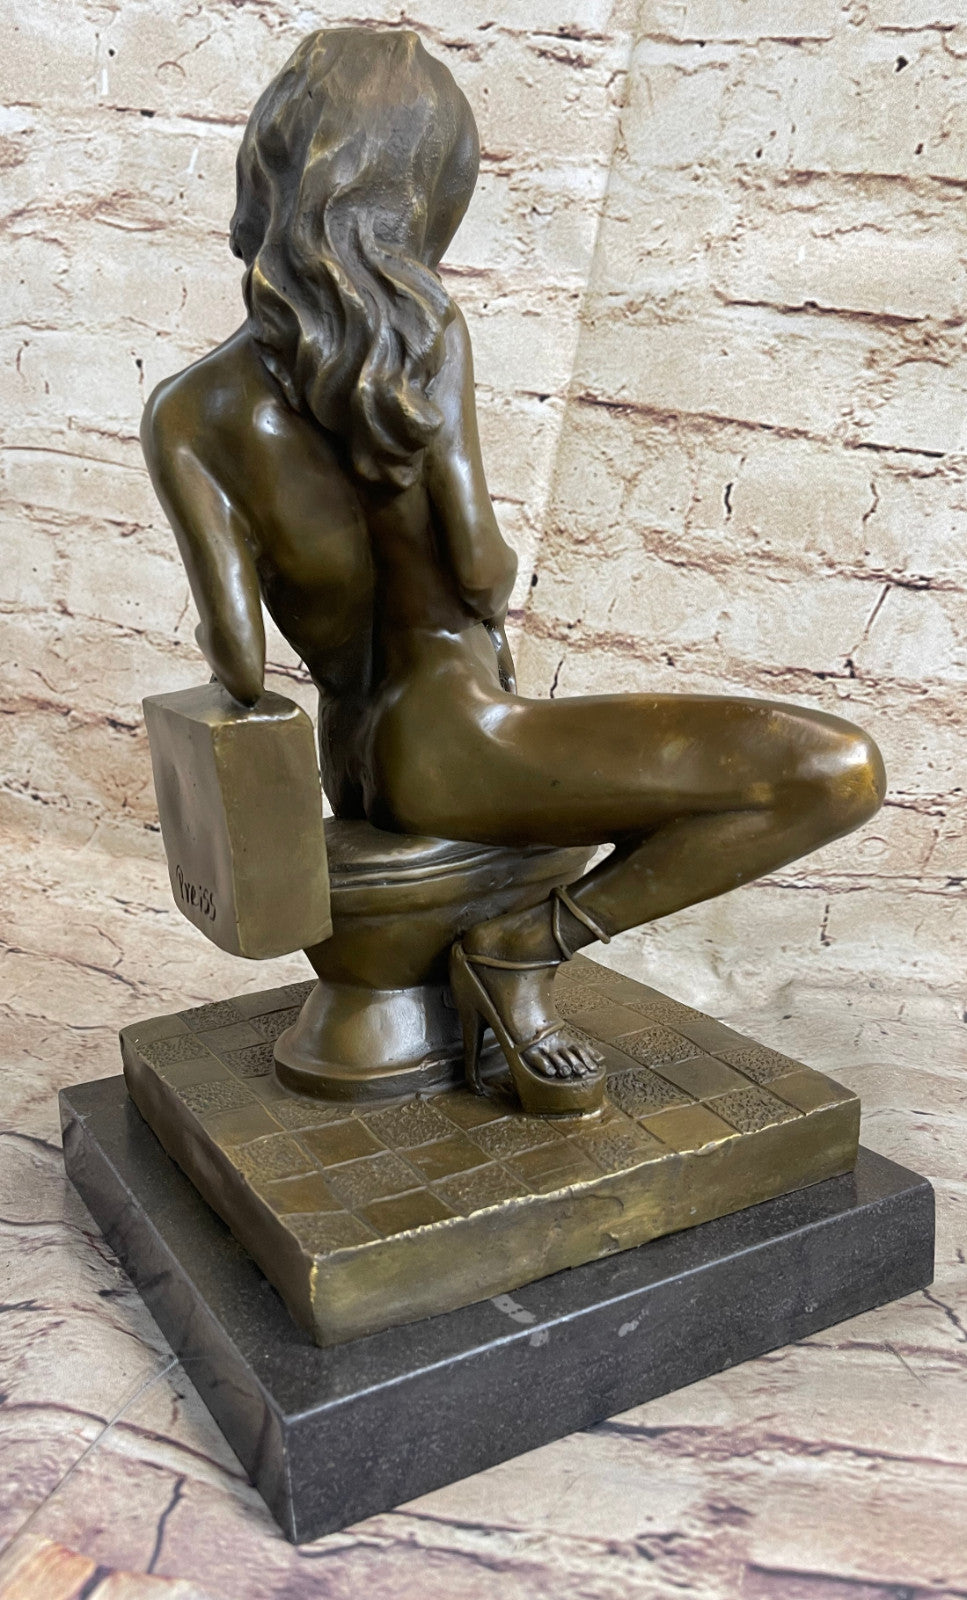 Highly Erotic Sexual Sex Bronze Sculpture Marble Base Figurine Statue Figurine